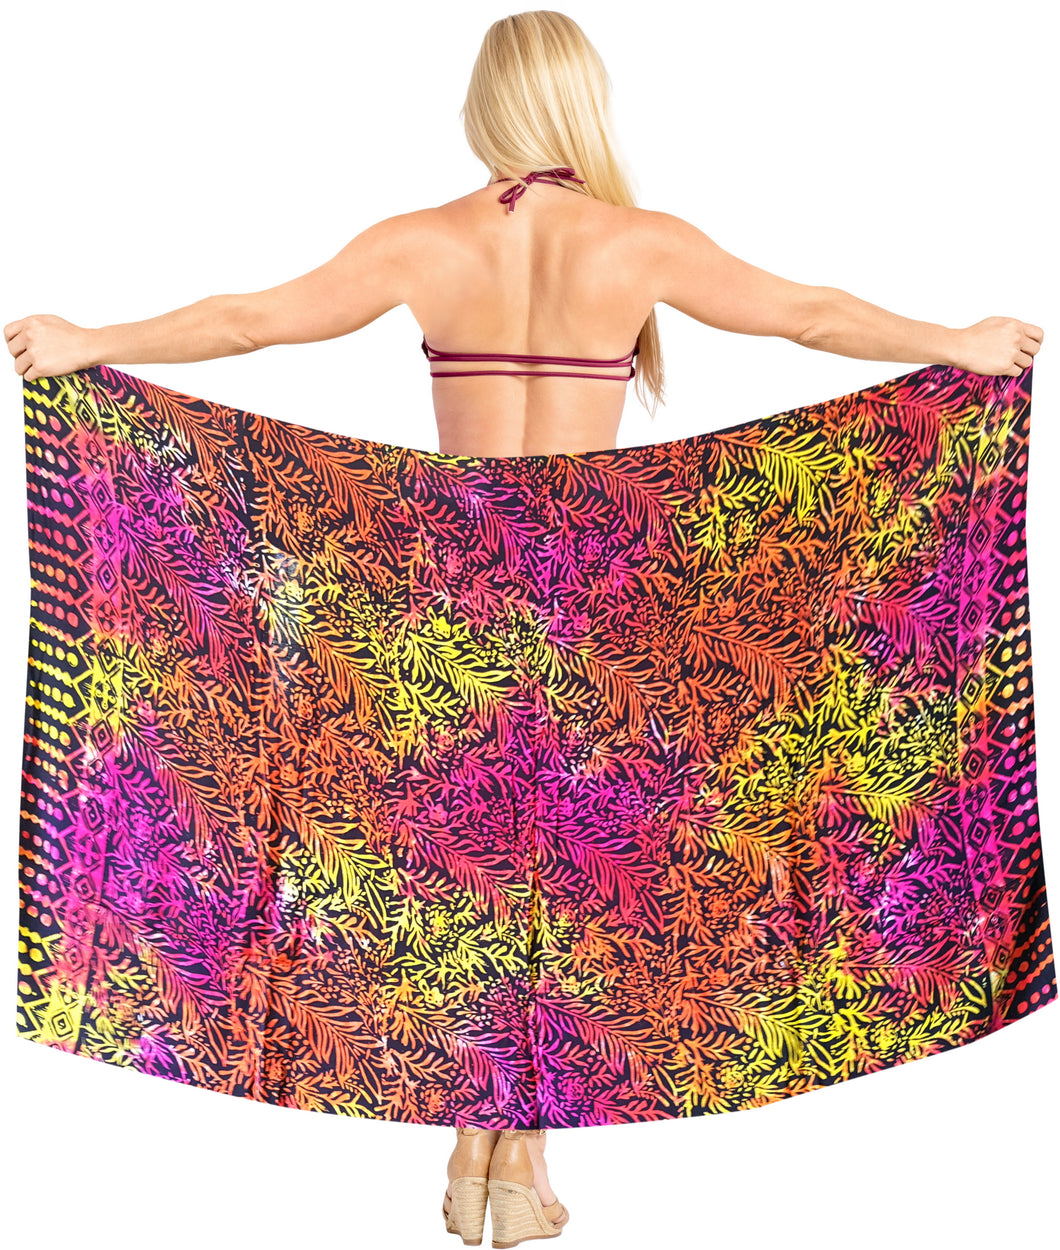 la-leela-bathing-towel-beach-wear-swimsuit-womens-Wrap Skirt-sarong-bikini-cover-up-Leaf-Printed-multicolor